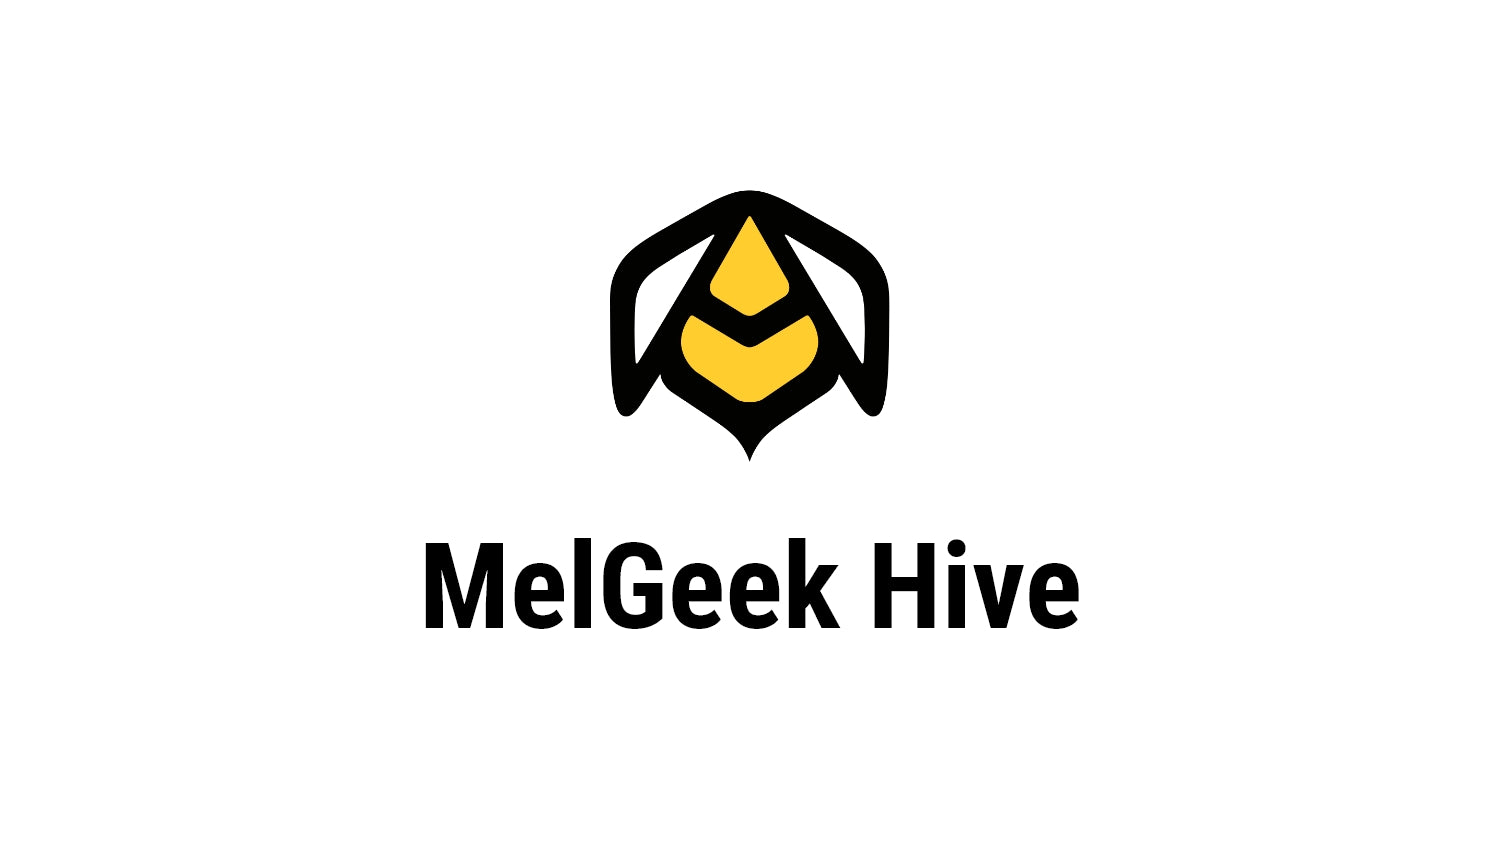 Introducing MelGeek Hive - Your Ultimate Desktop Management Software